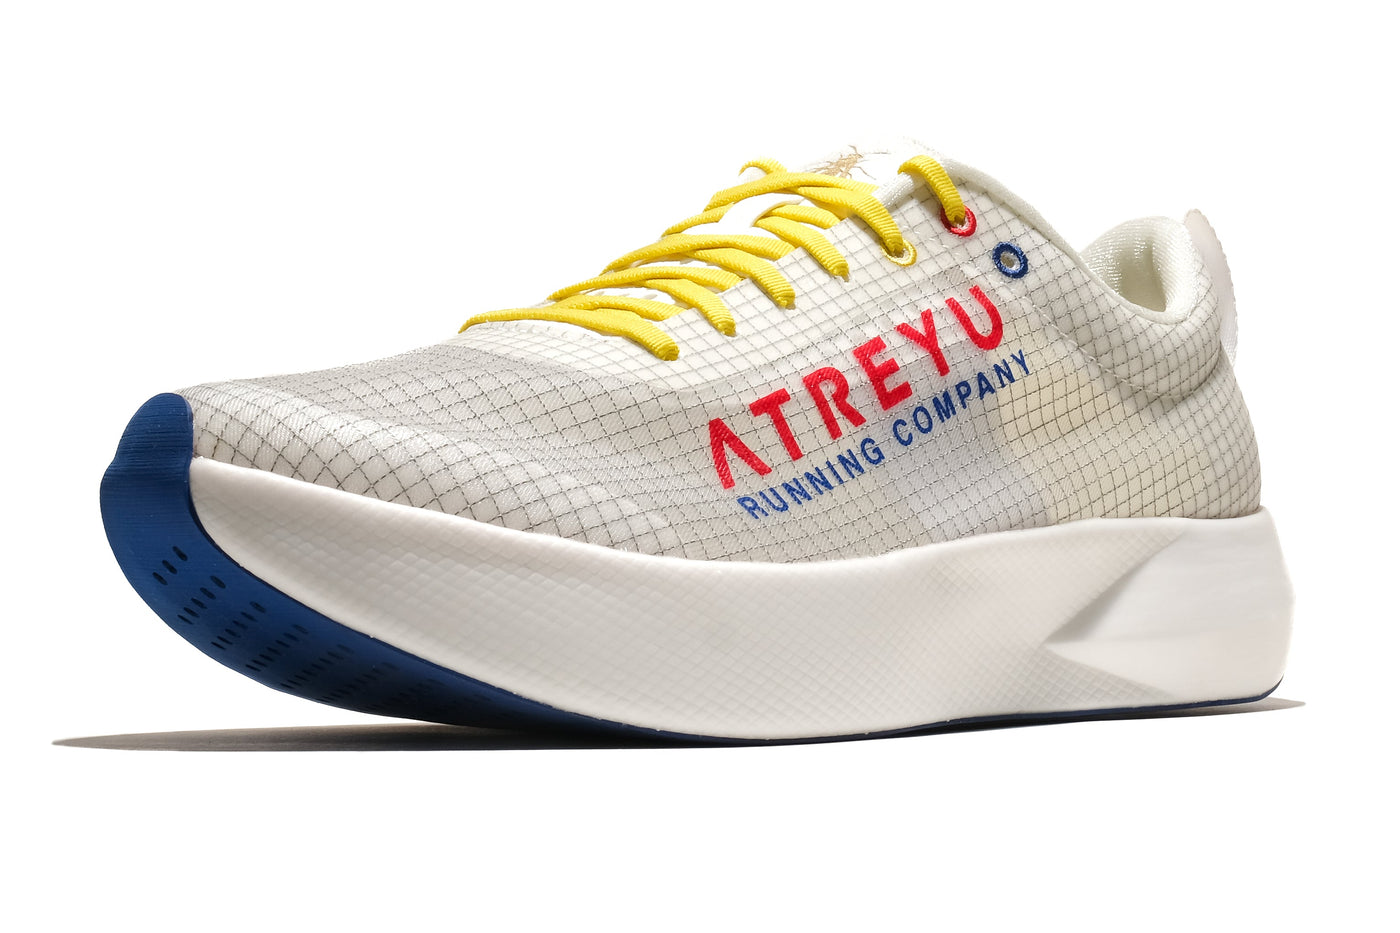 Atreyu Race Model - Carbon Plated Running Shoe Angle